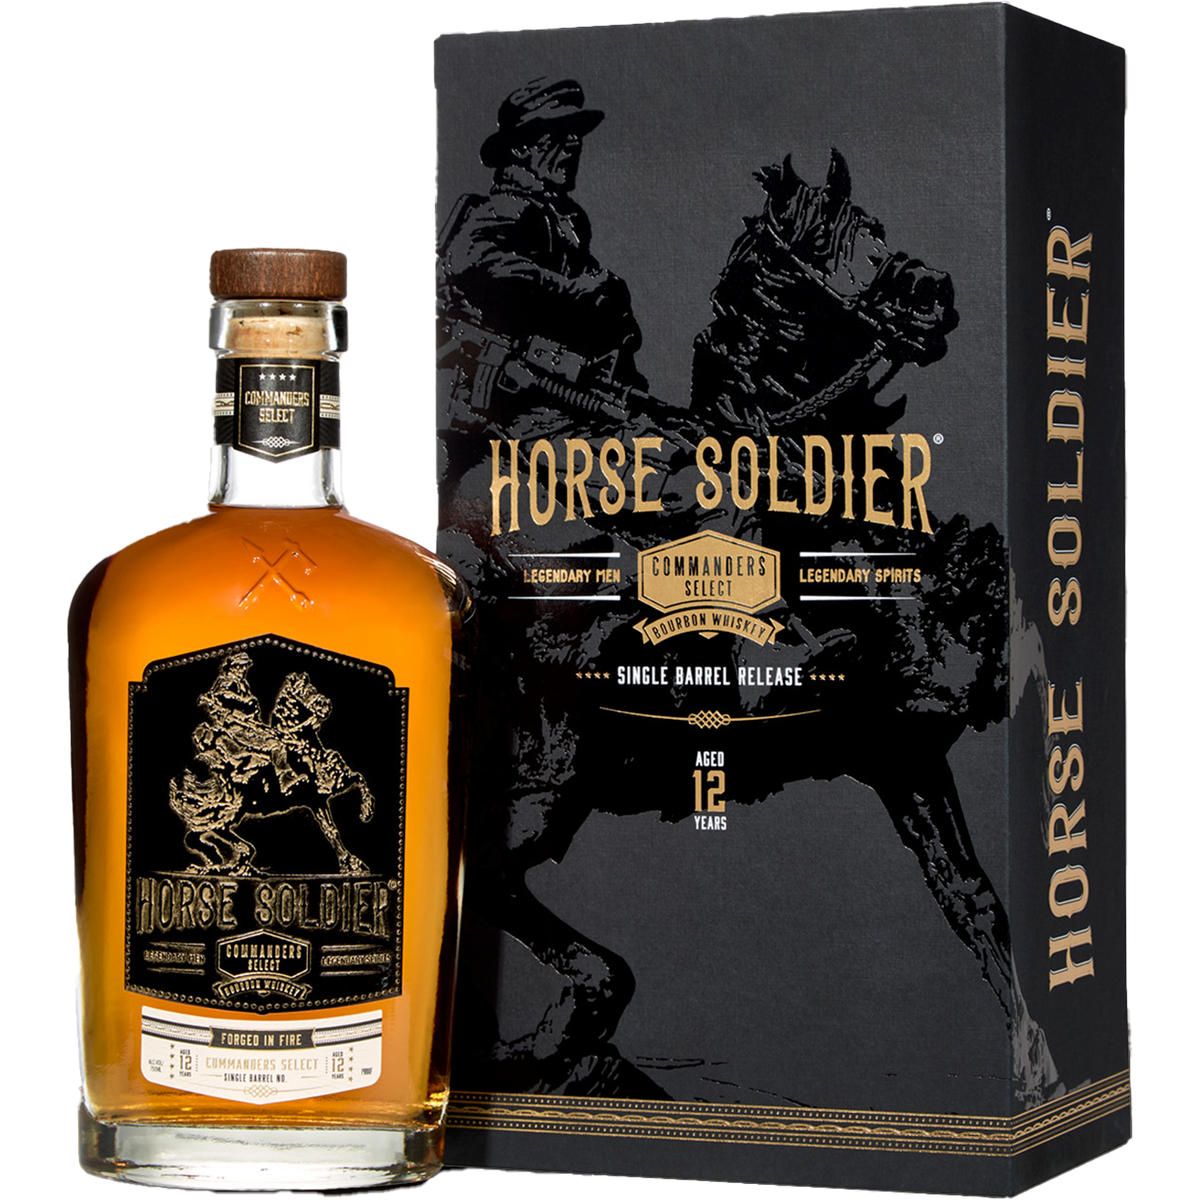 Small Batch Straight Bourbon Whiskey – Horse Soldier Bourbon